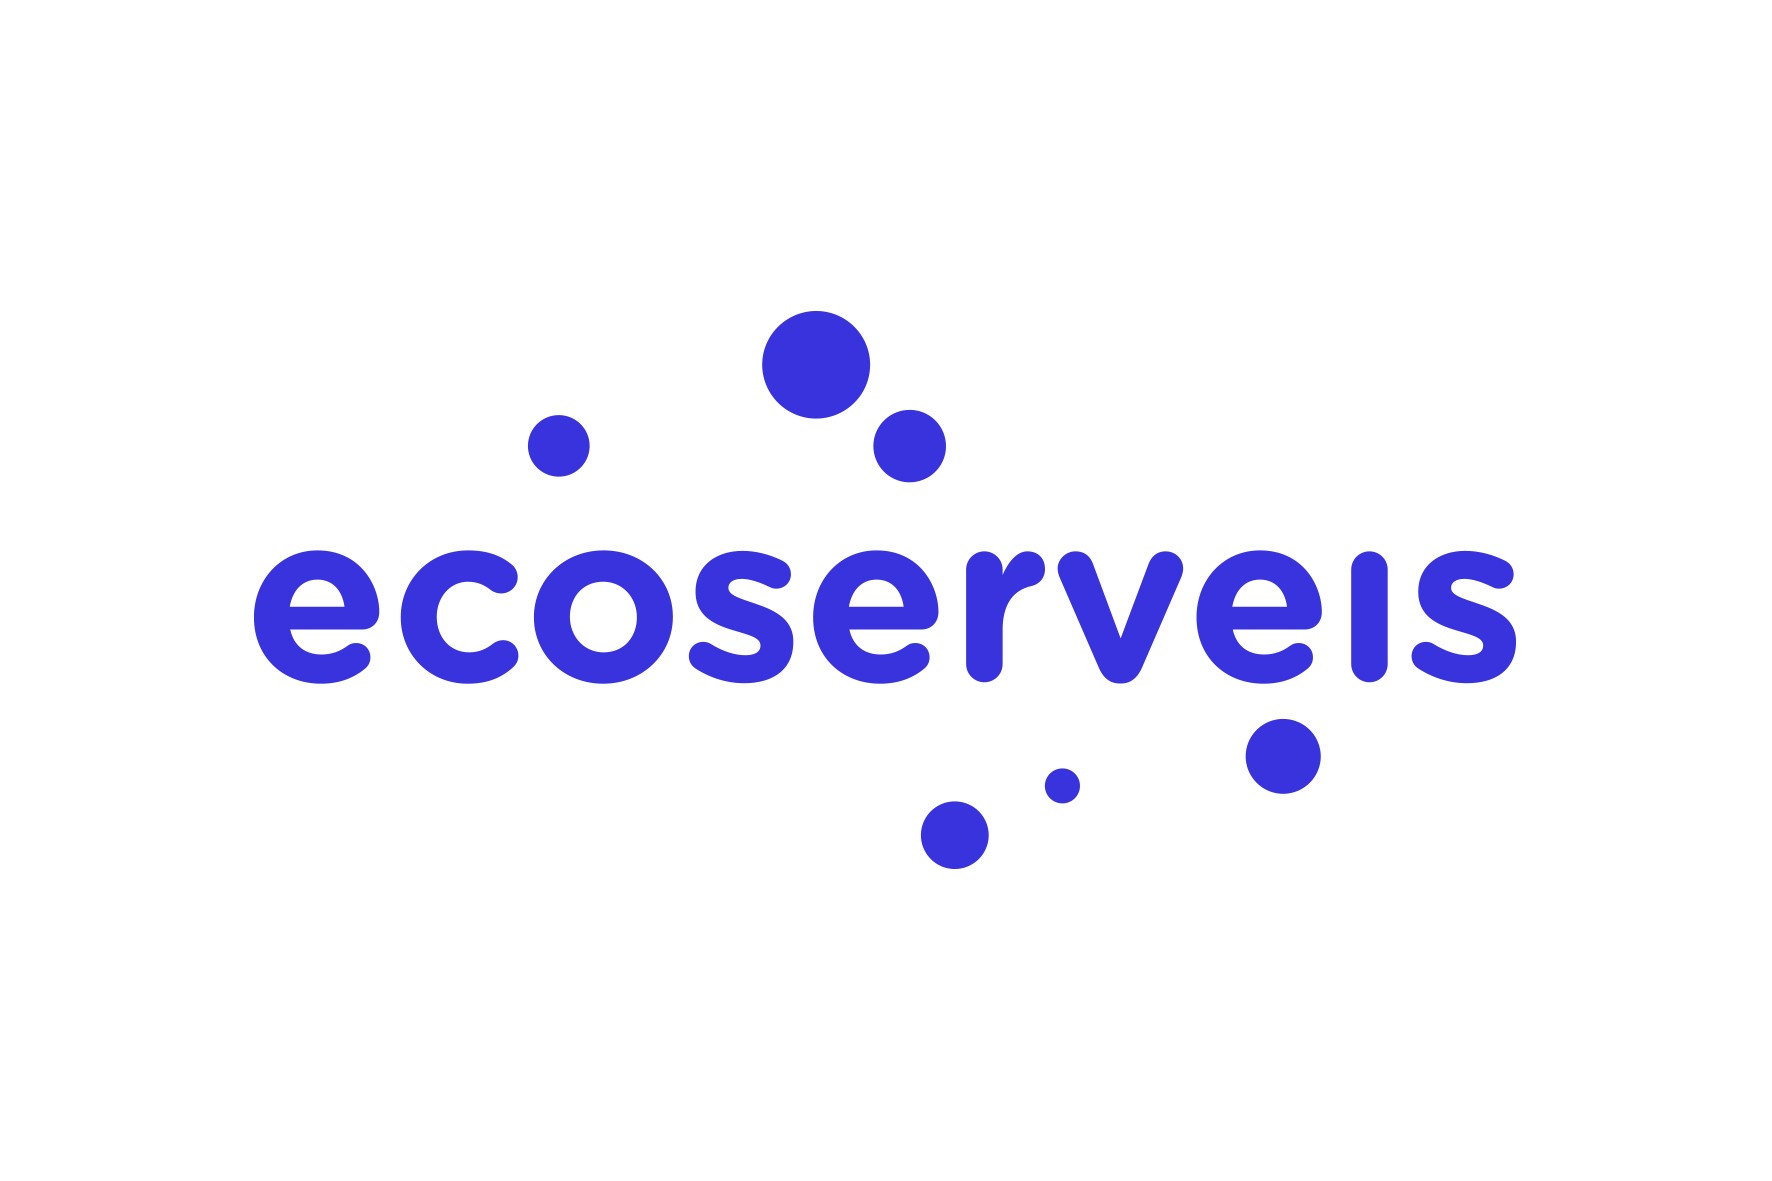 ecoserveis logo